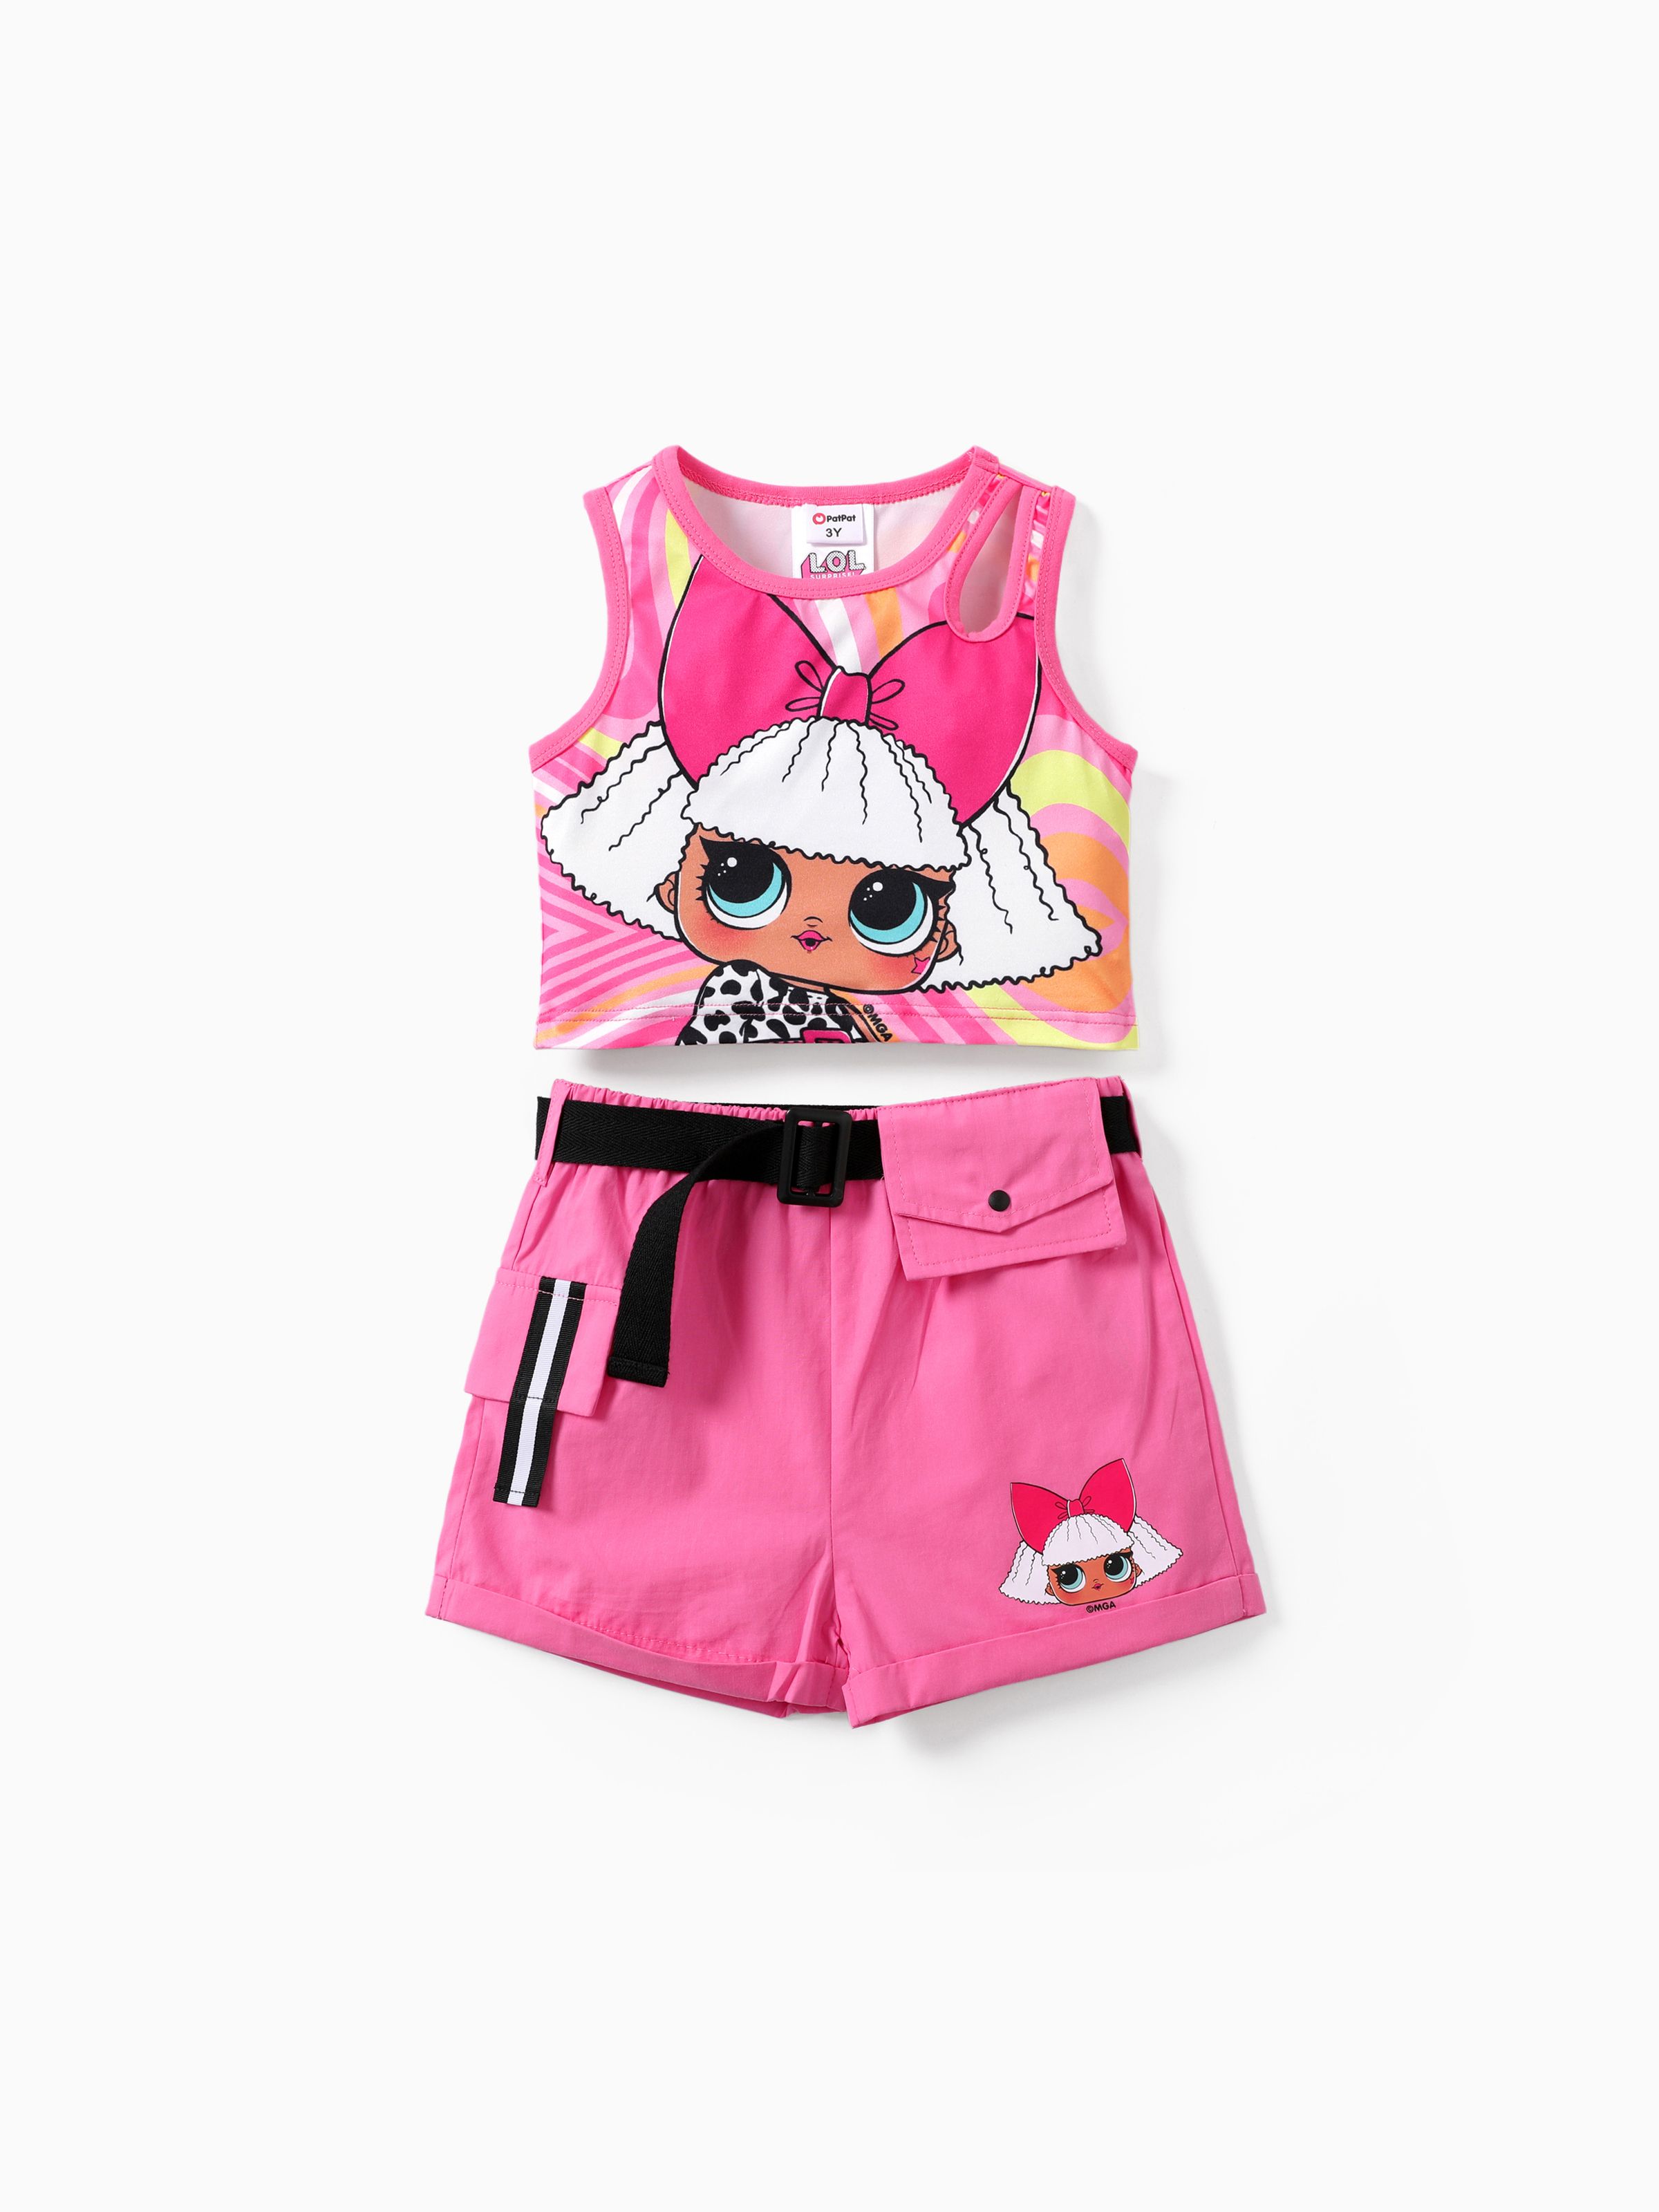 

L.O.L. Surprise 2pcs Toddler/Kids Girls Character Waist Bag Cargo Shorts Set